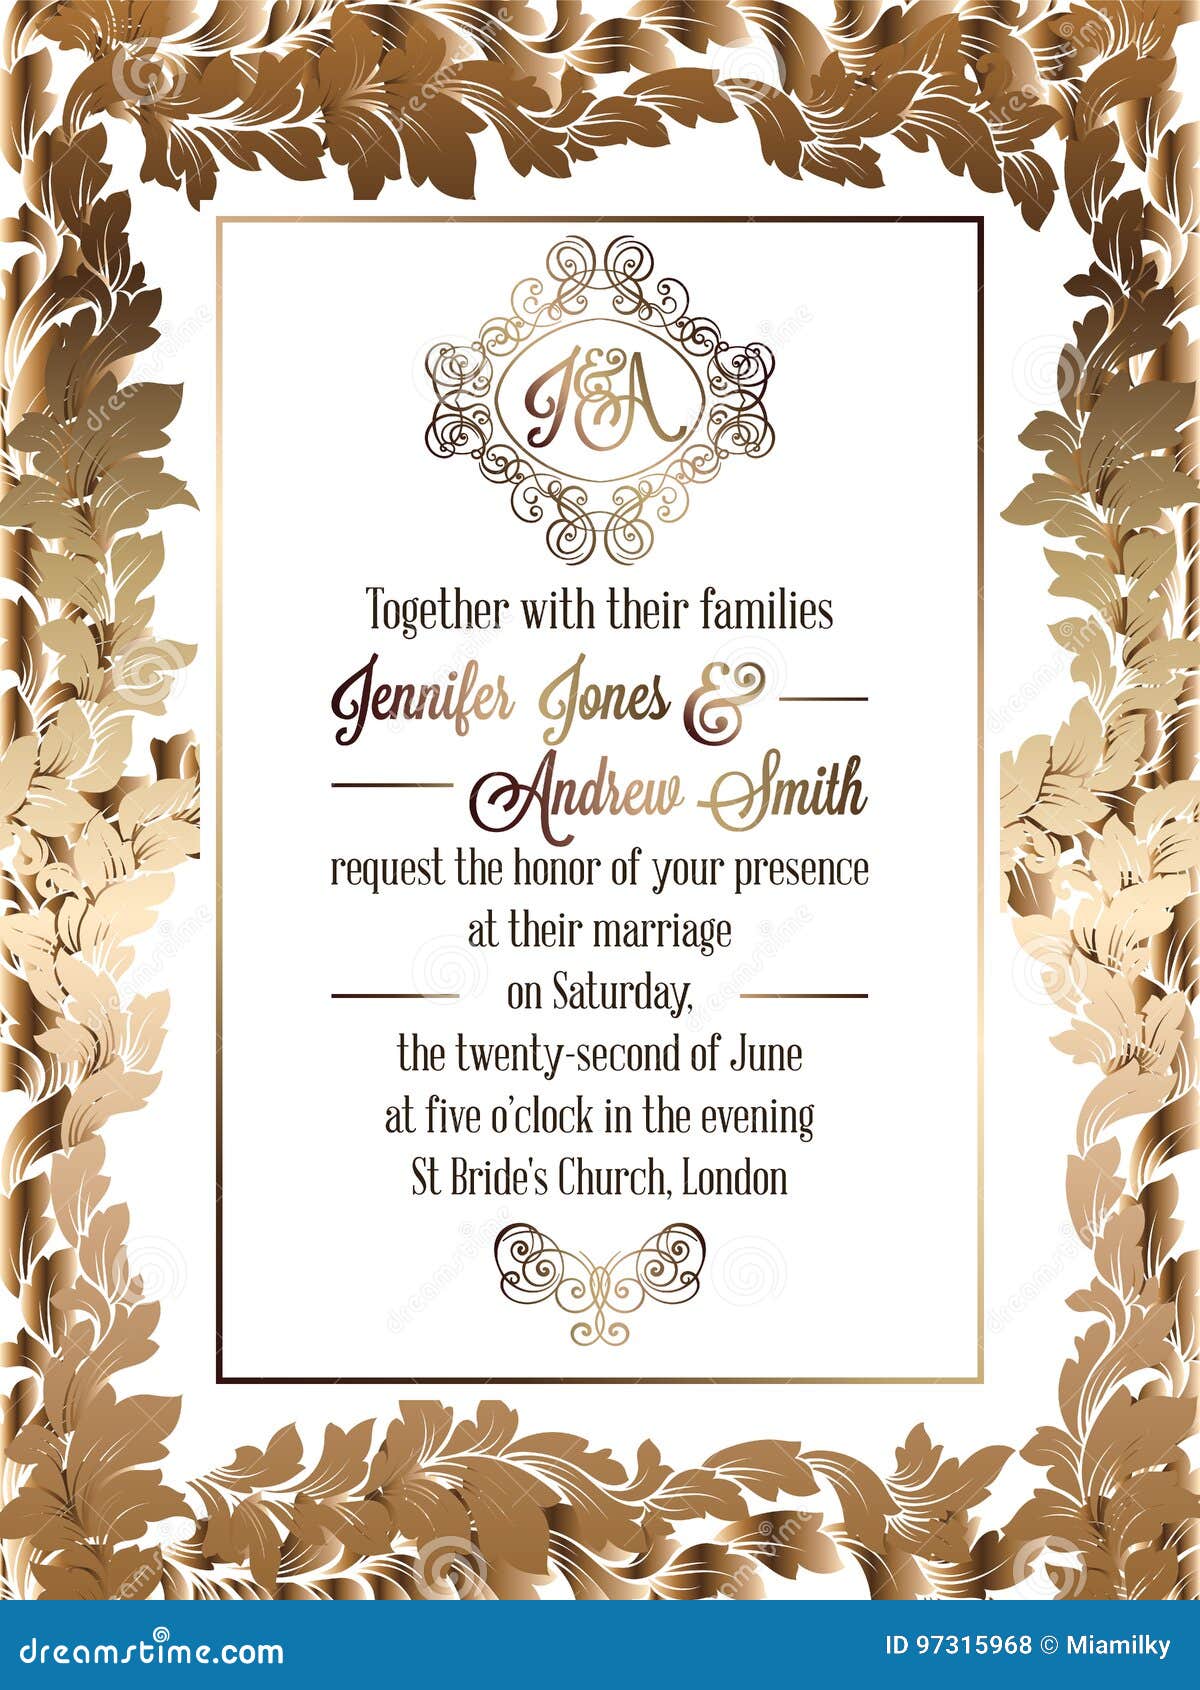 vintage baroque style wedding invitation card template. stock